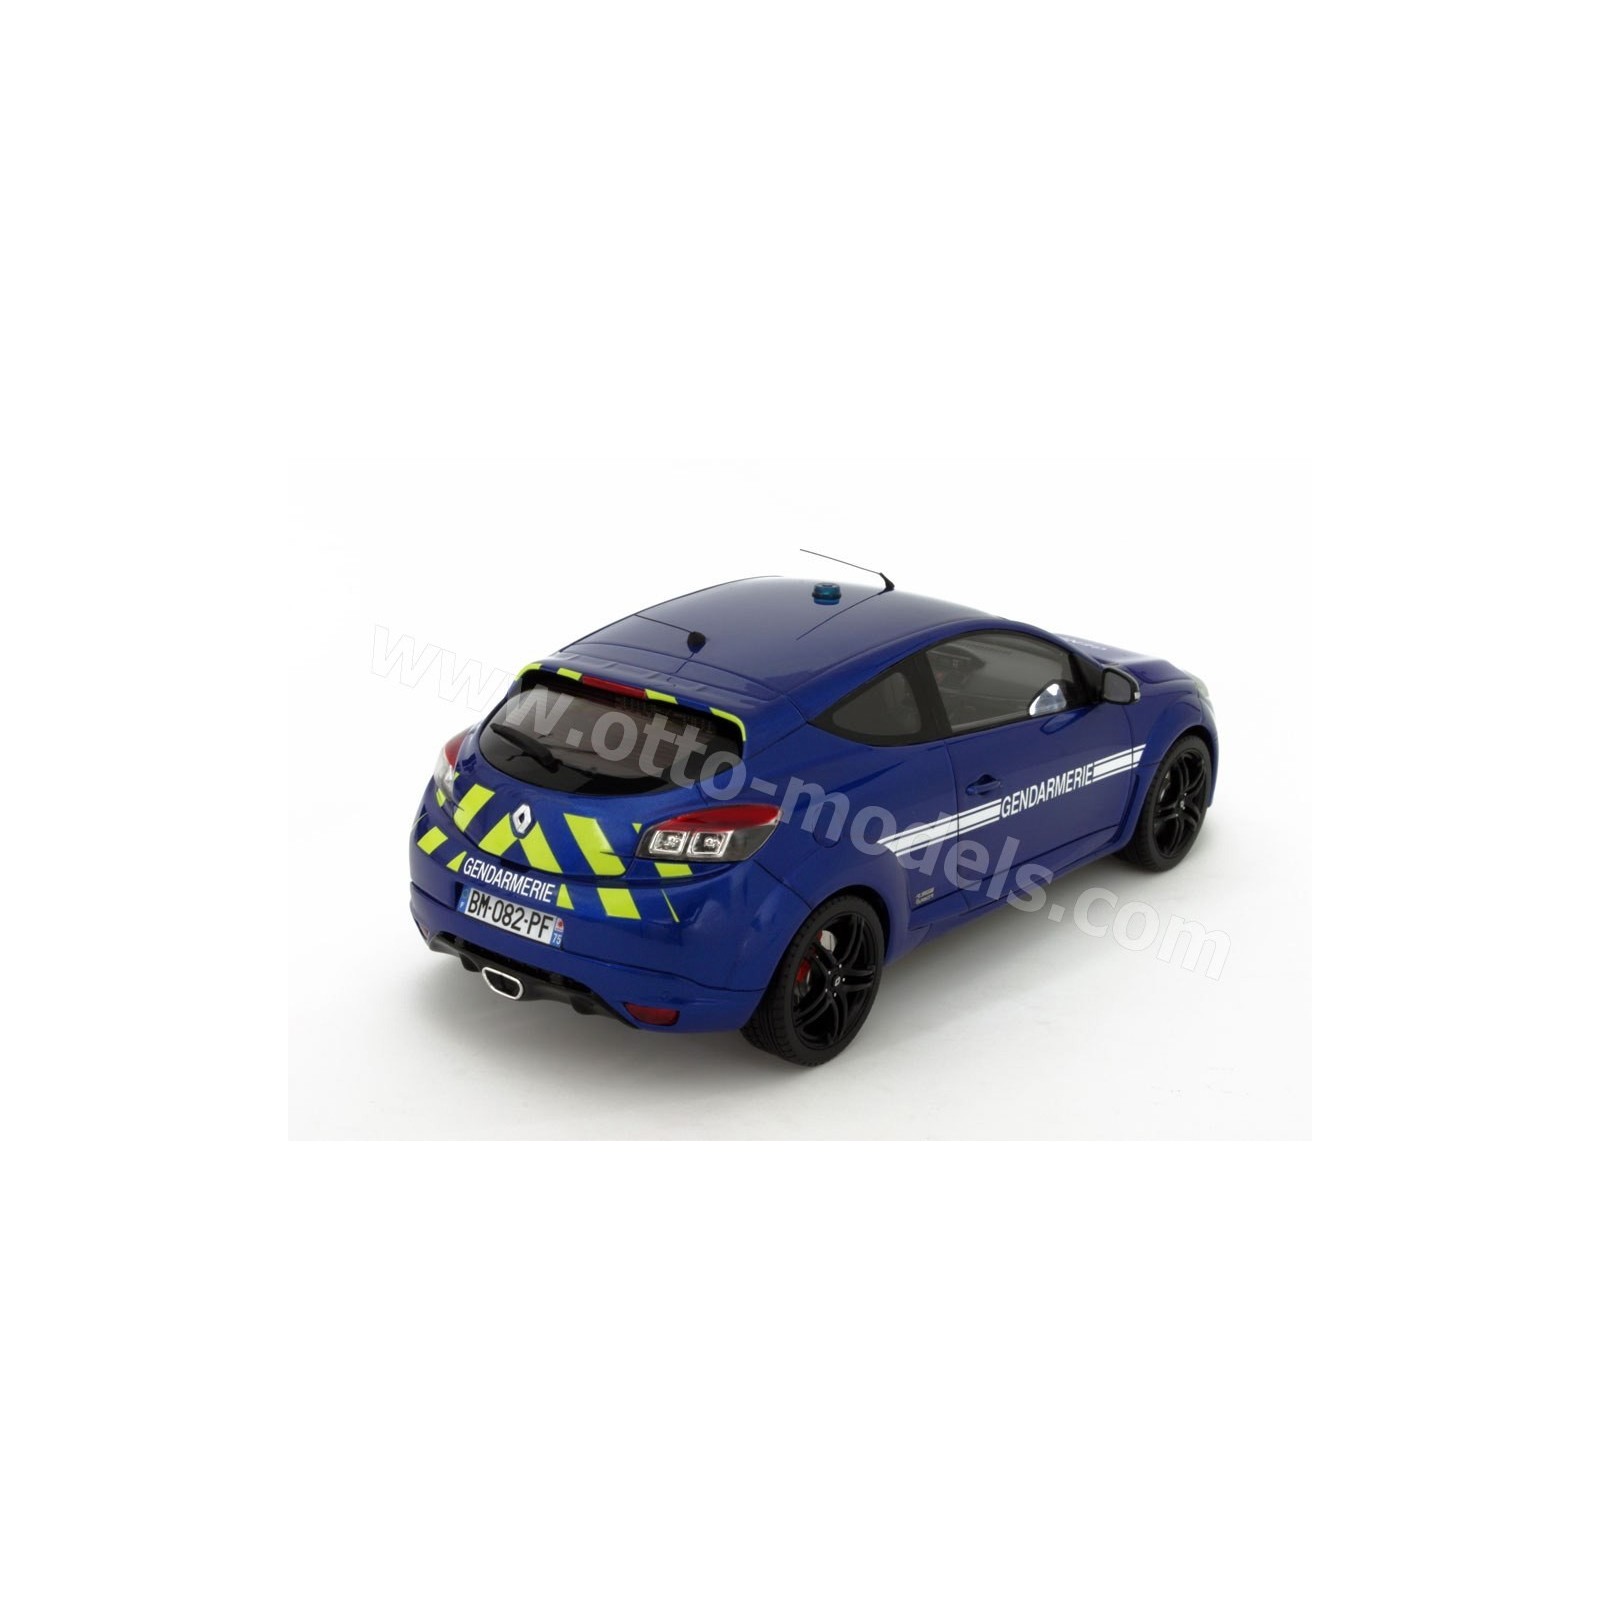 Renault Mégane III RS Trophy Gendarmerie : série nippone très